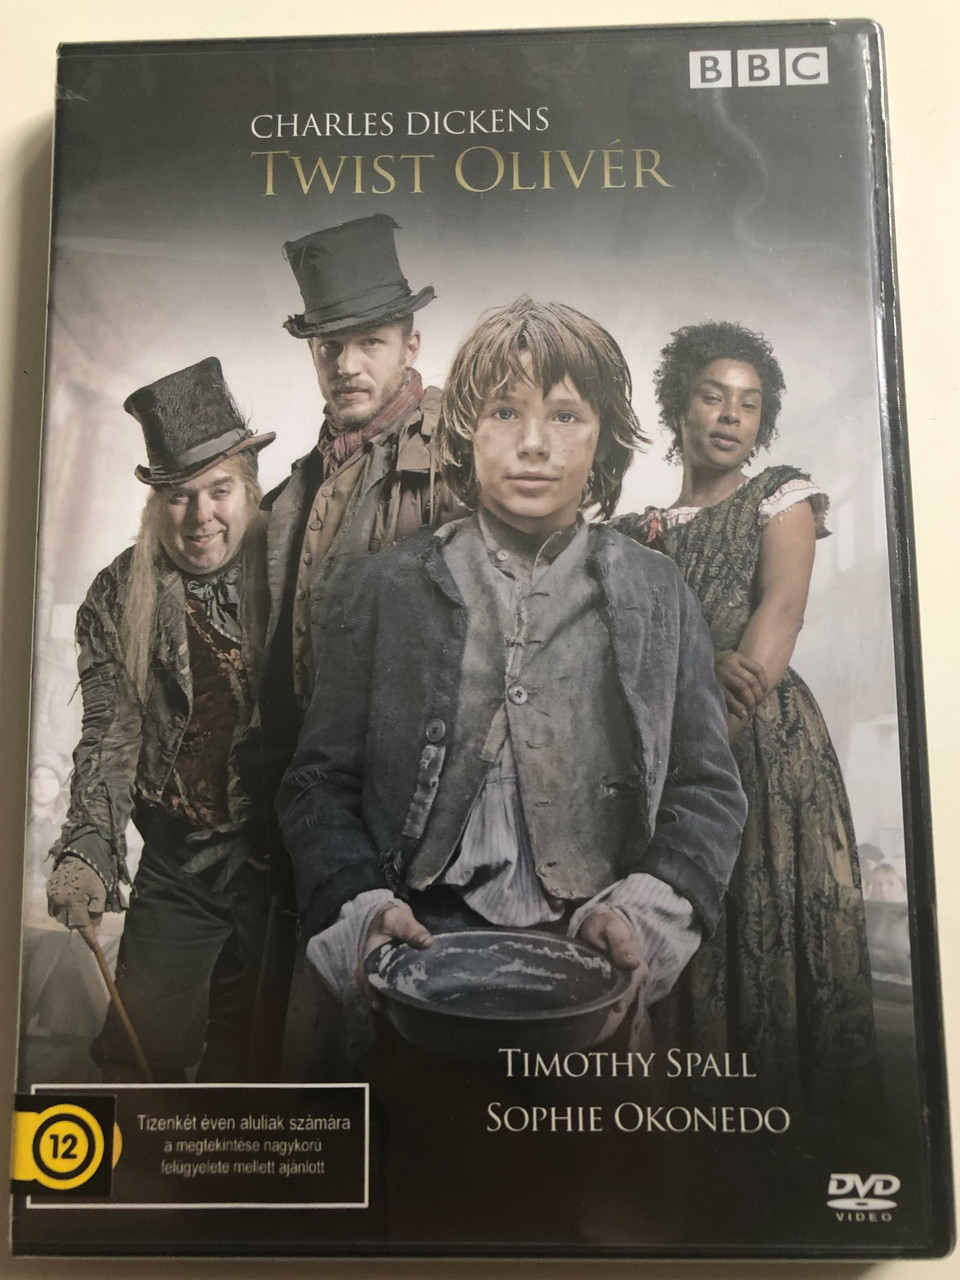 Oliver Twist DVD 2007 Twist Olivér / BBC TV film / Directed by Coky  Giedroyc / Starring: William Miller, Ruby Bentall, Rob Brydon -  bibleinmylanguage